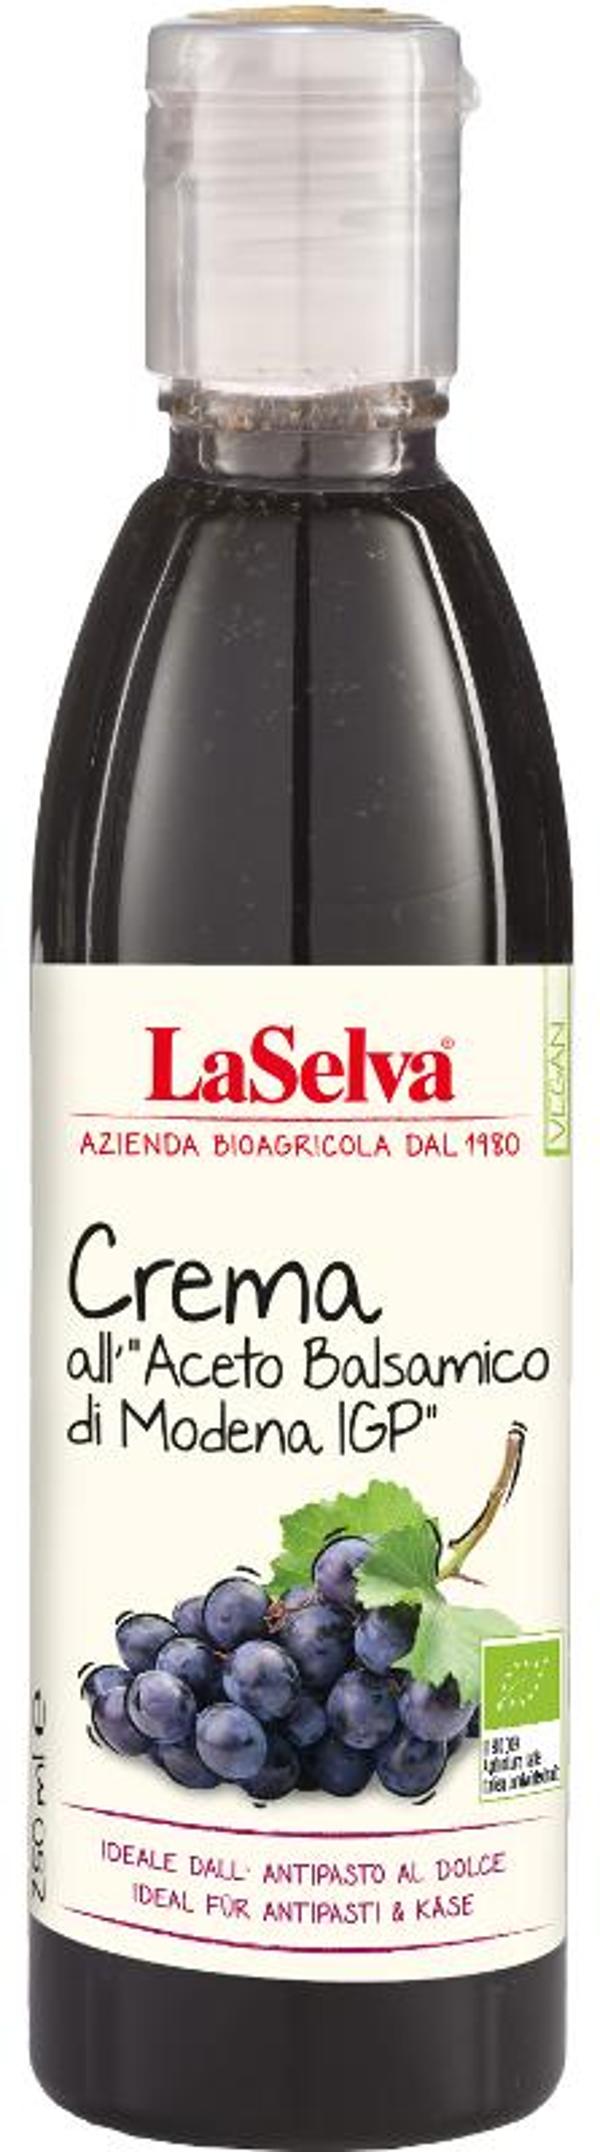 Produktfoto zu Crema all Aceto Balsamico di Modena IGP